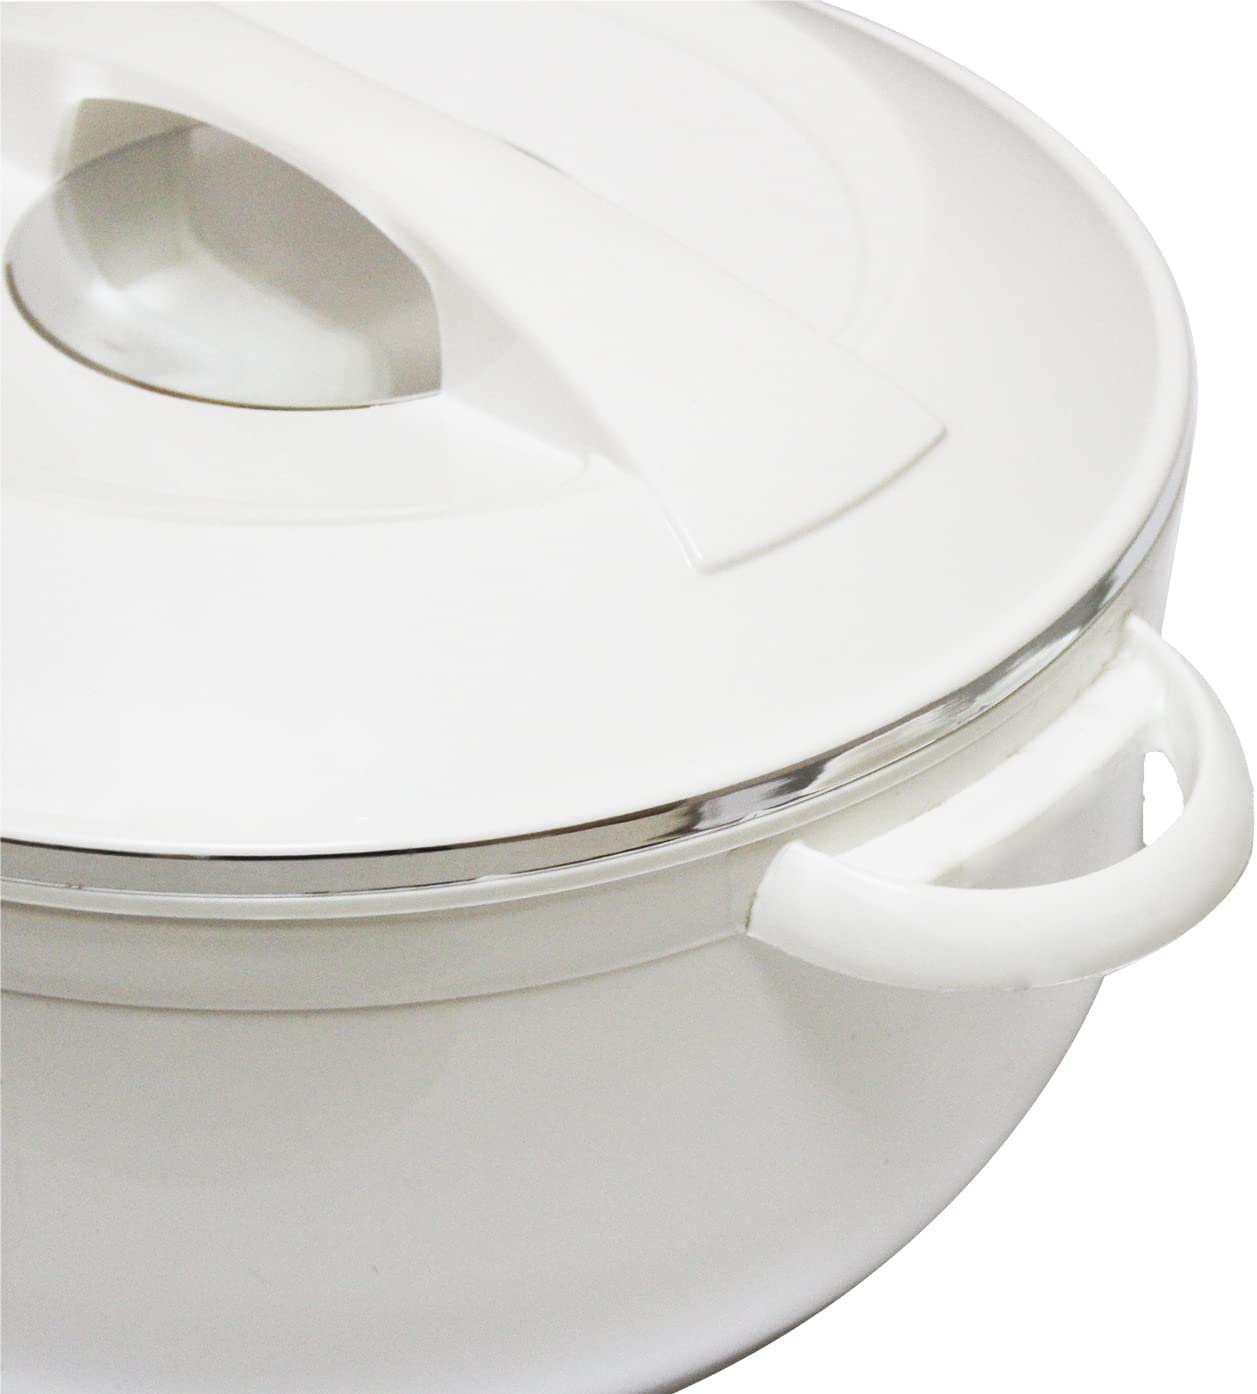 Nova Casserole Hotpot, Stainless Steel insulated Hot Pot, Food Warmer, Keeps Food Warm for Hours Set of 3 Pcs